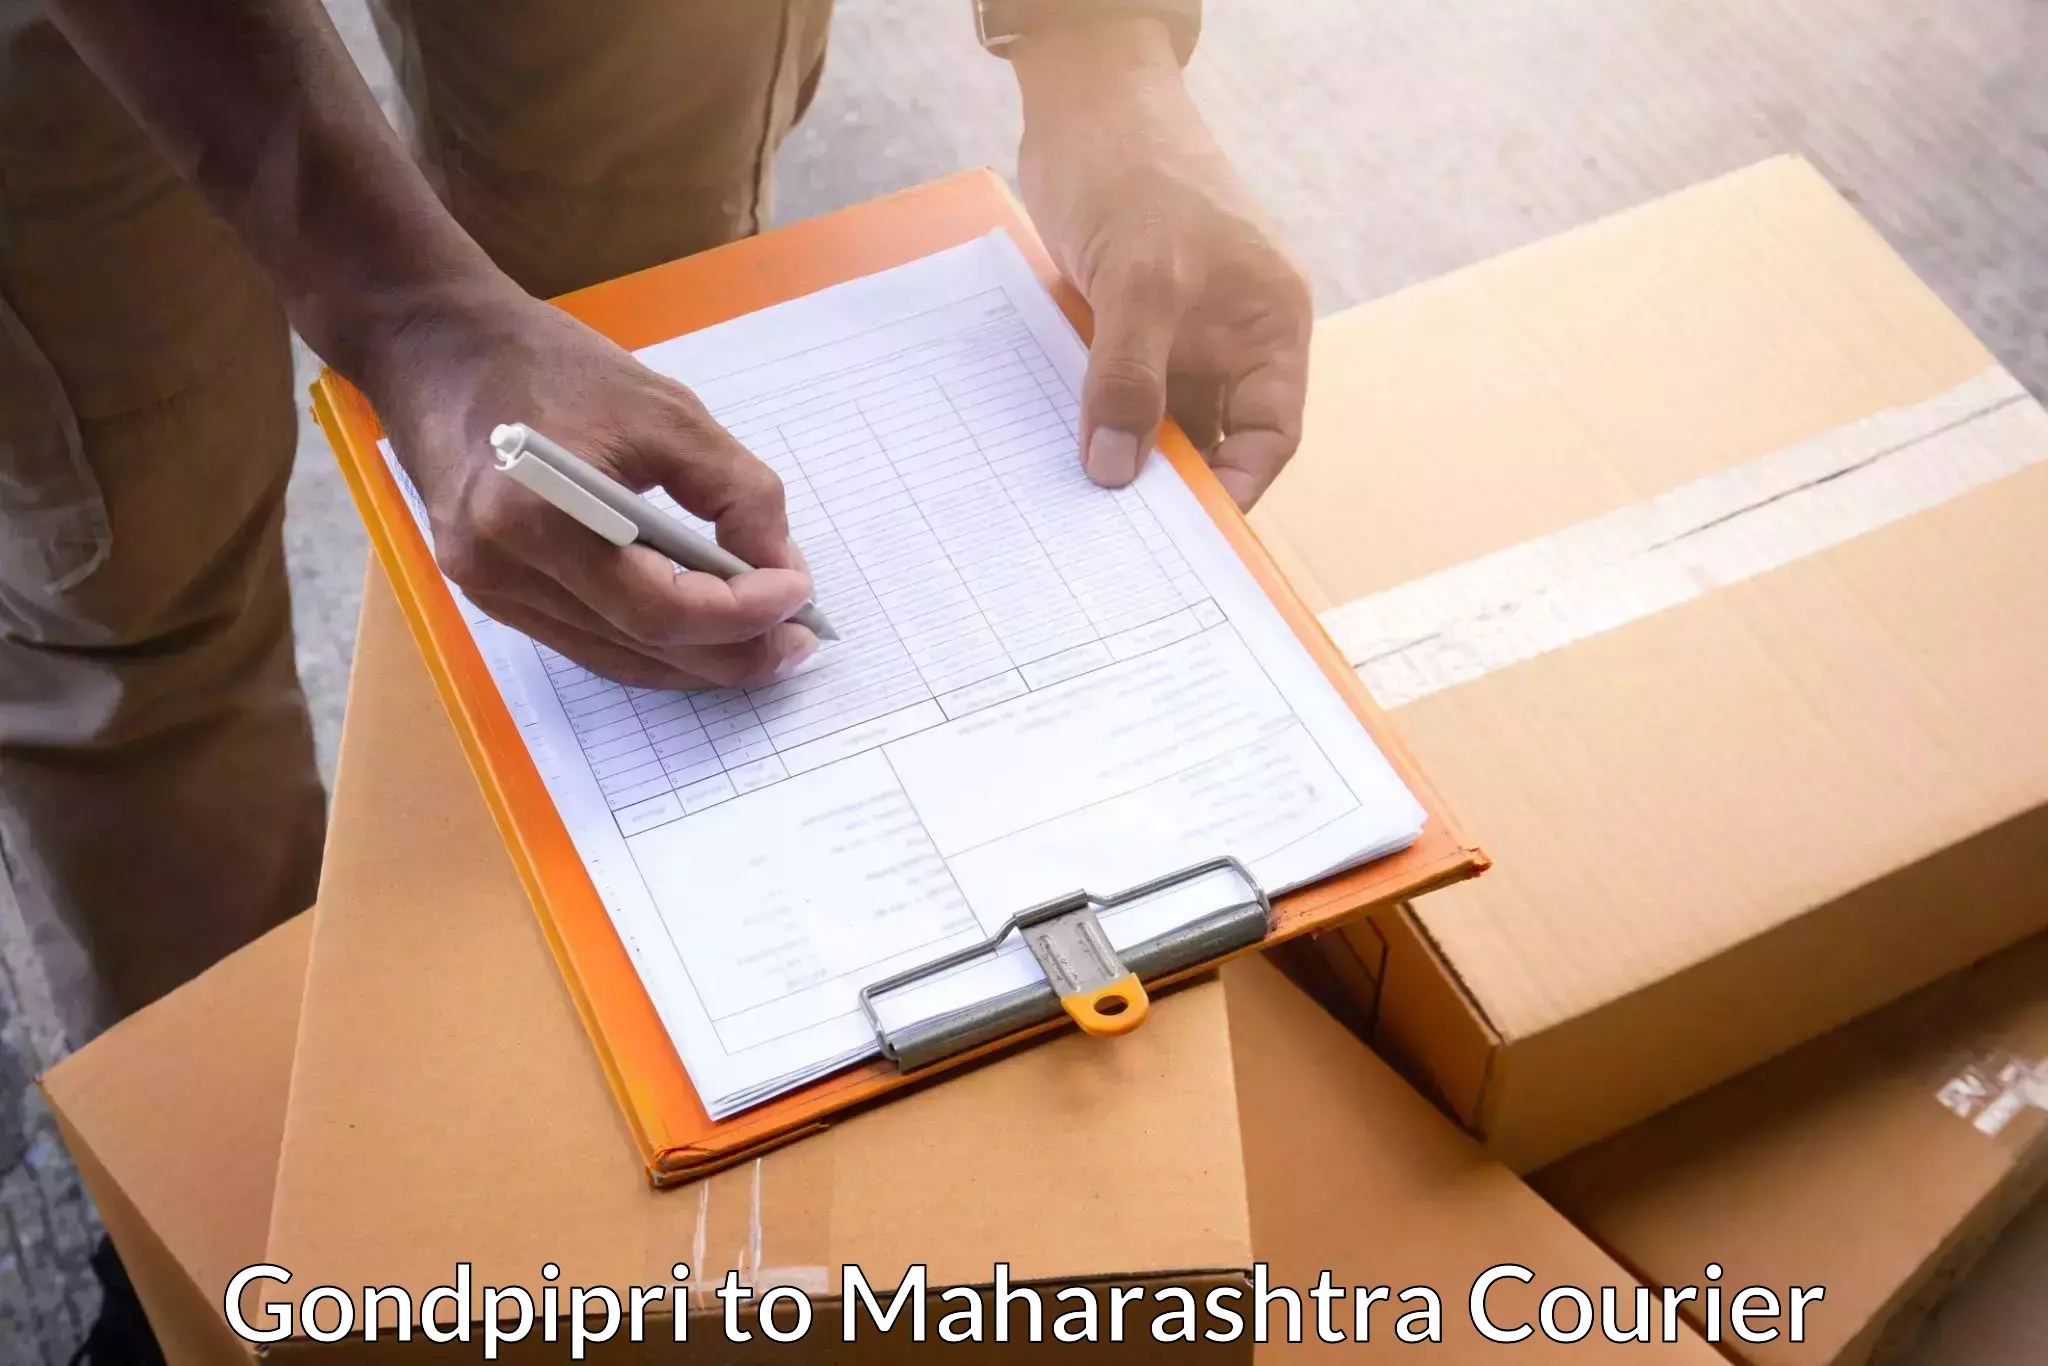 Delivery service partnership in Gondpipri to Wardha